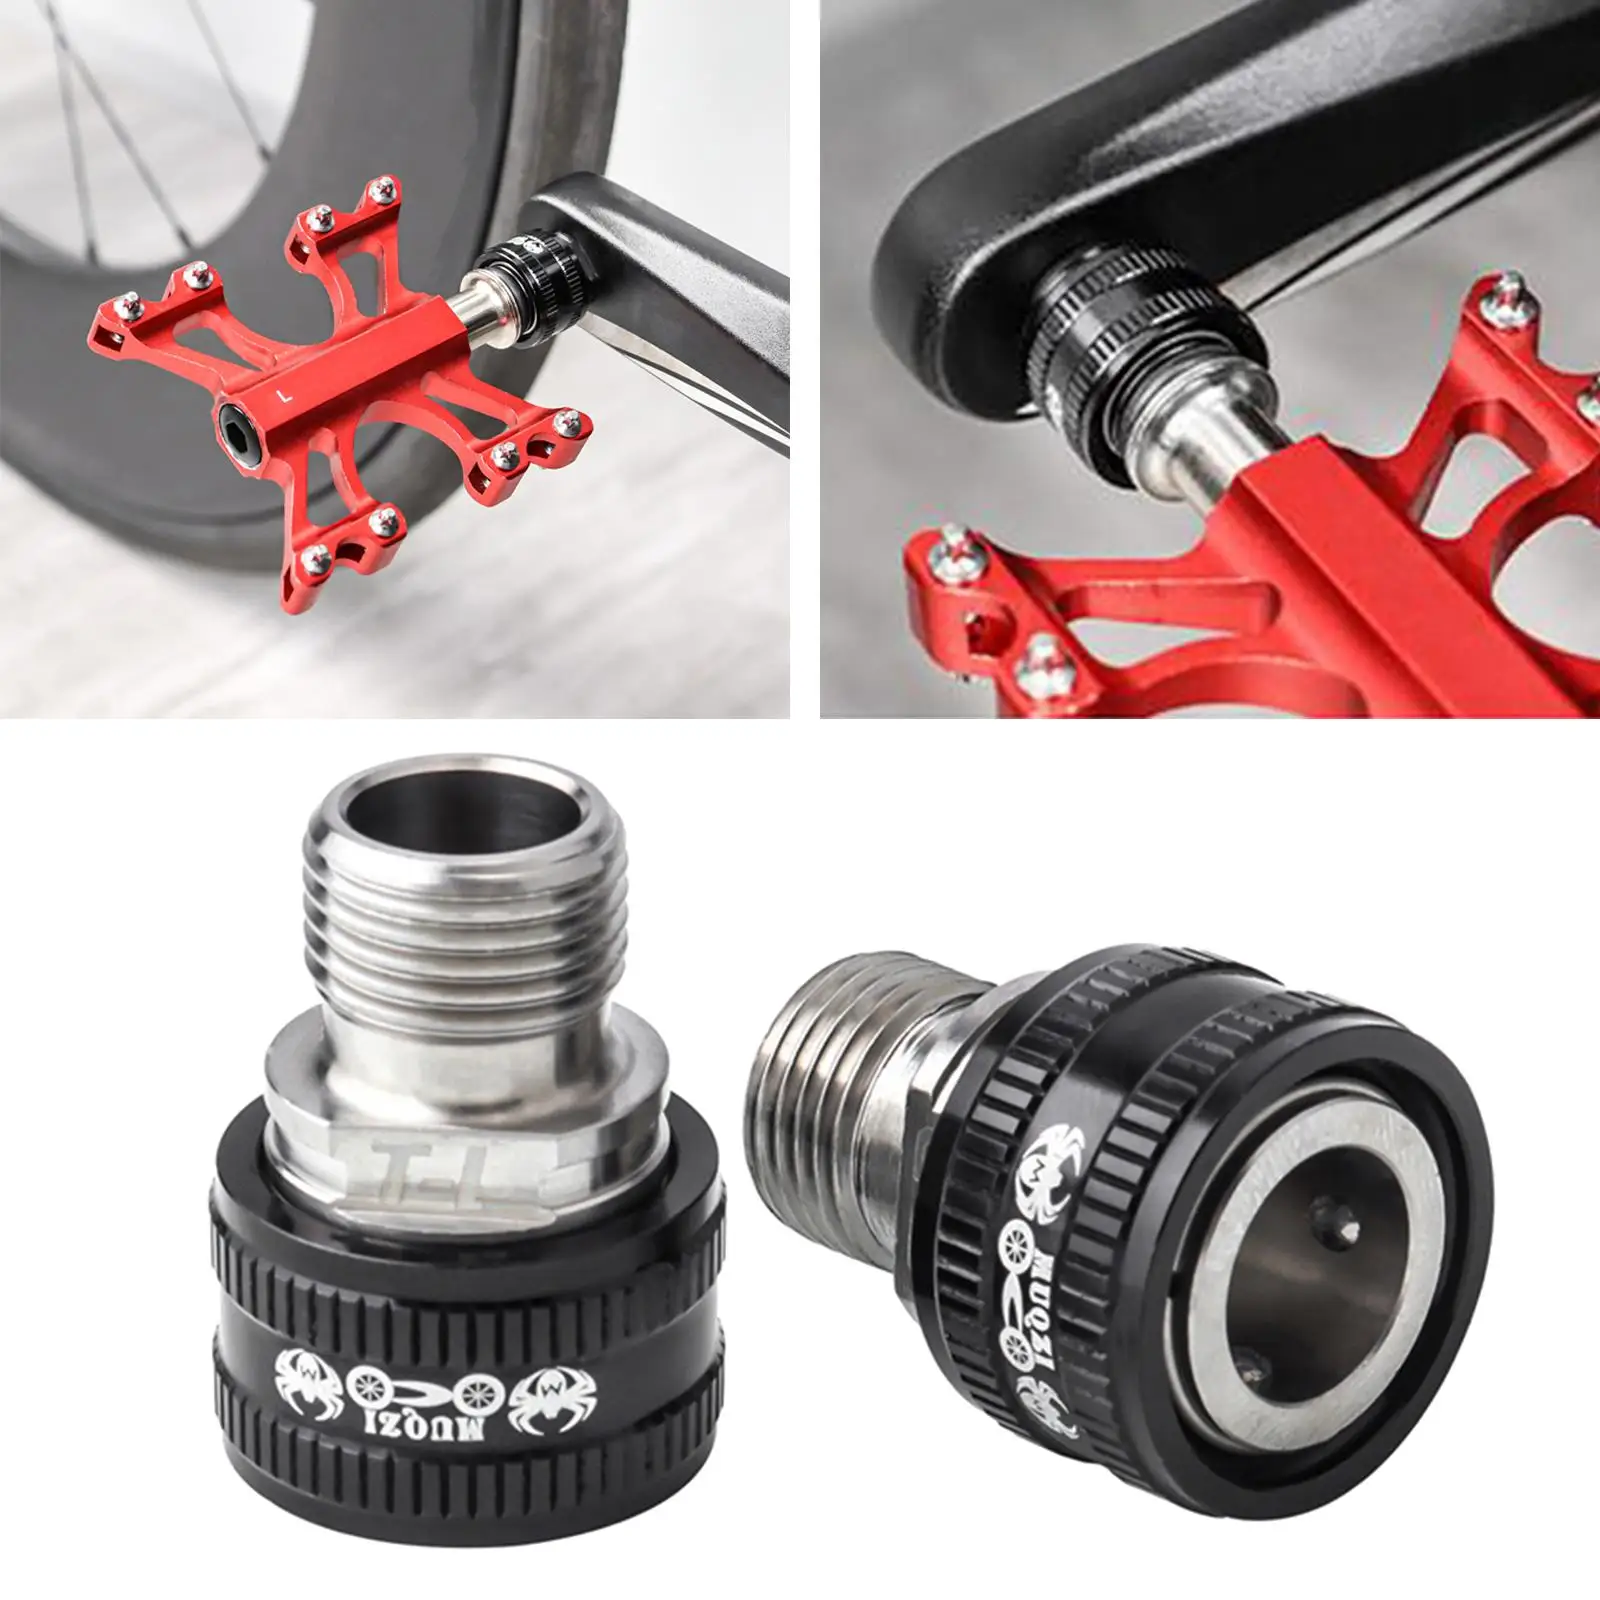 2pcs Bike Pedal Extenders Aluminum MTB Bicycle Pedal Extender Extended Pedal 9/16 in Threaded Pedals Parts